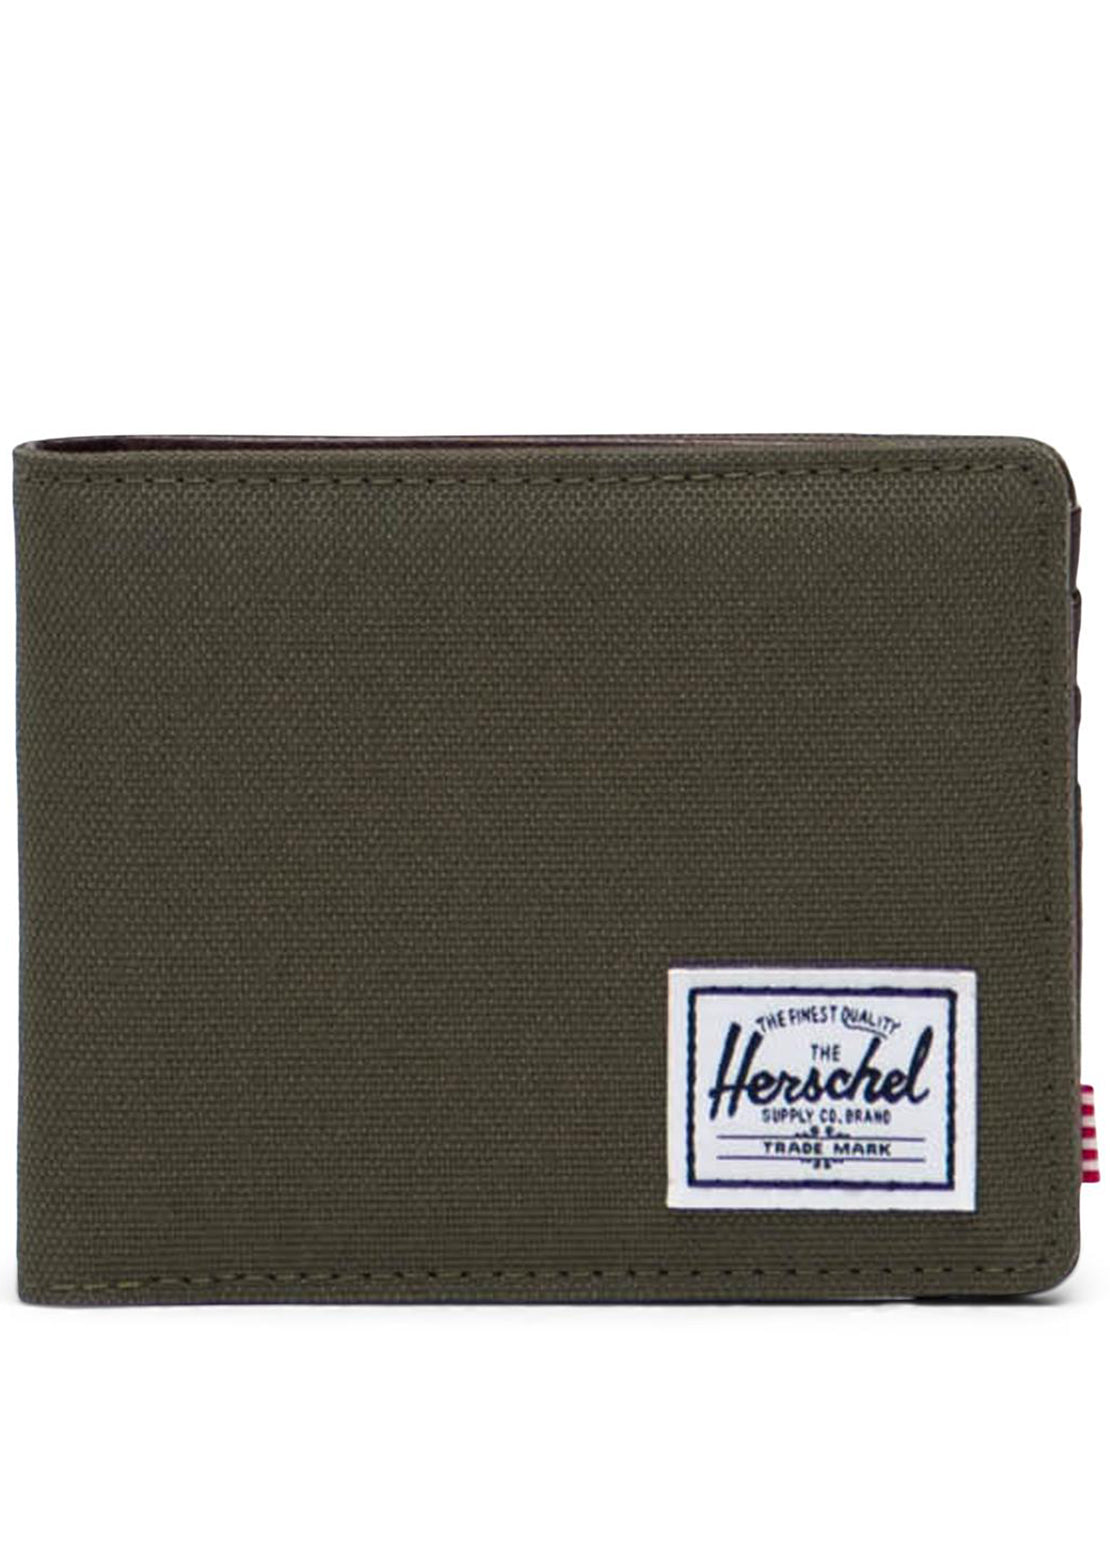 Herschel Hank RFID Wallet Ivy Green